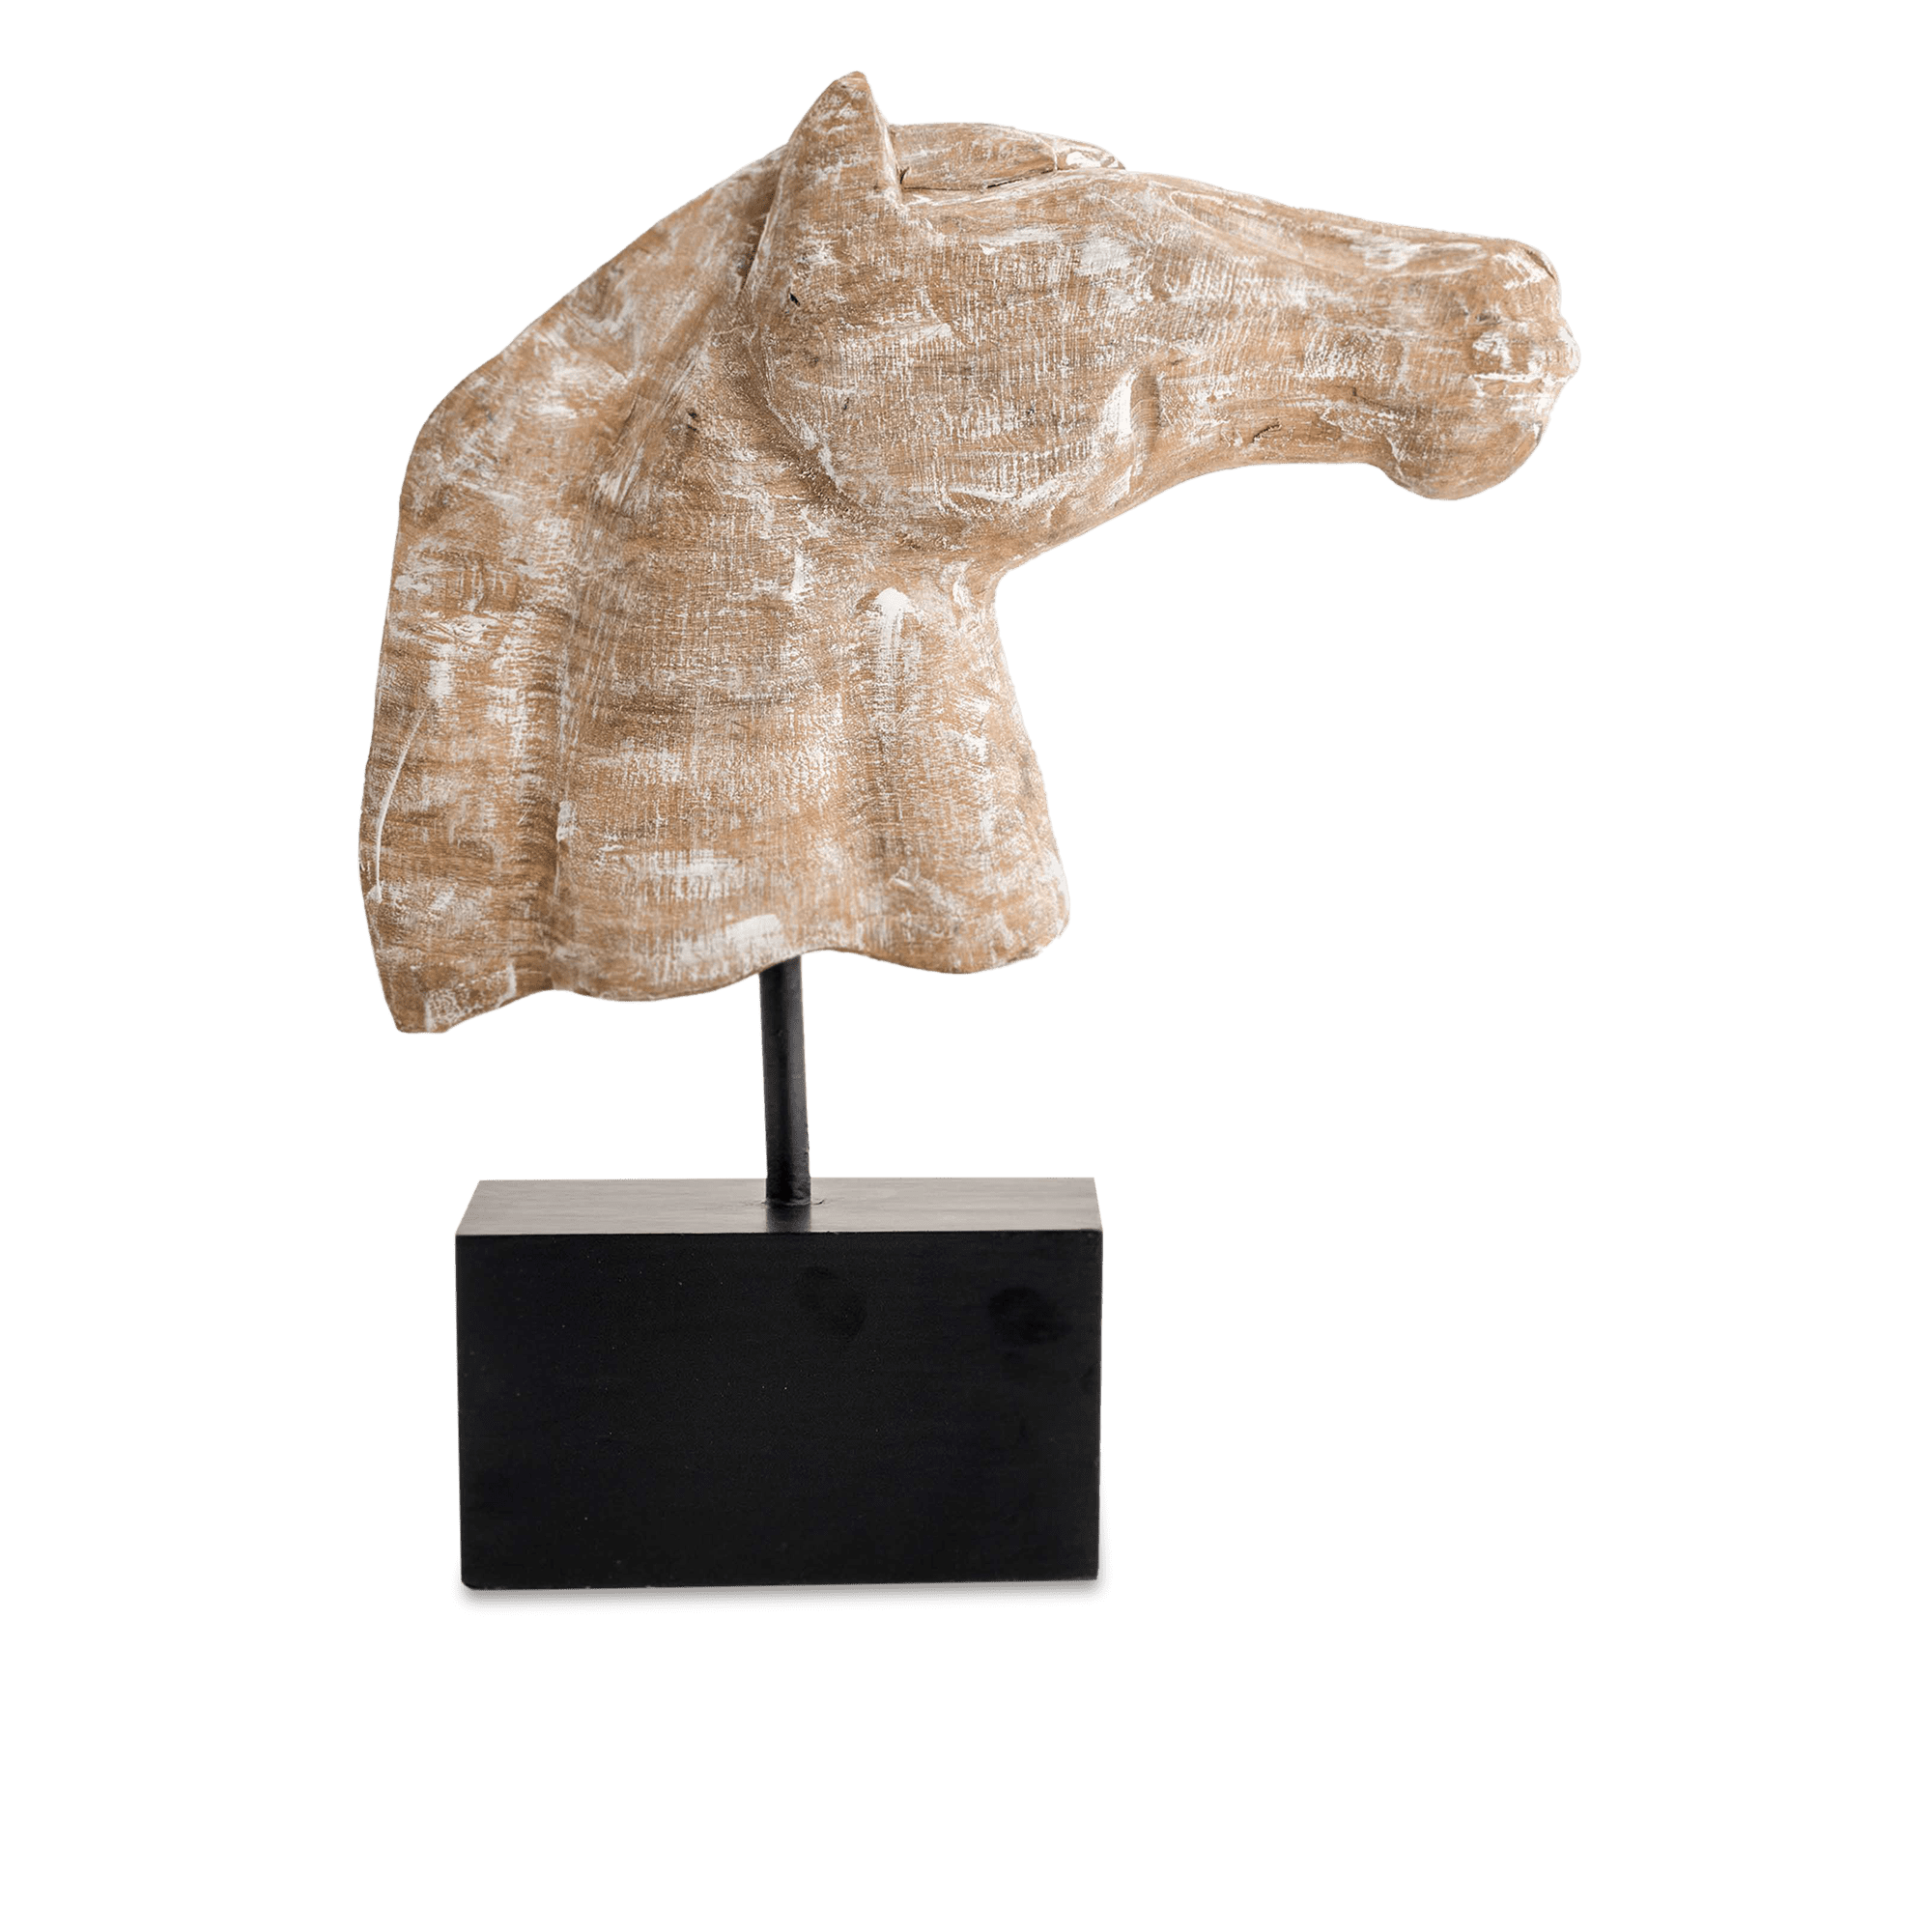 Roman Horse Sculpture